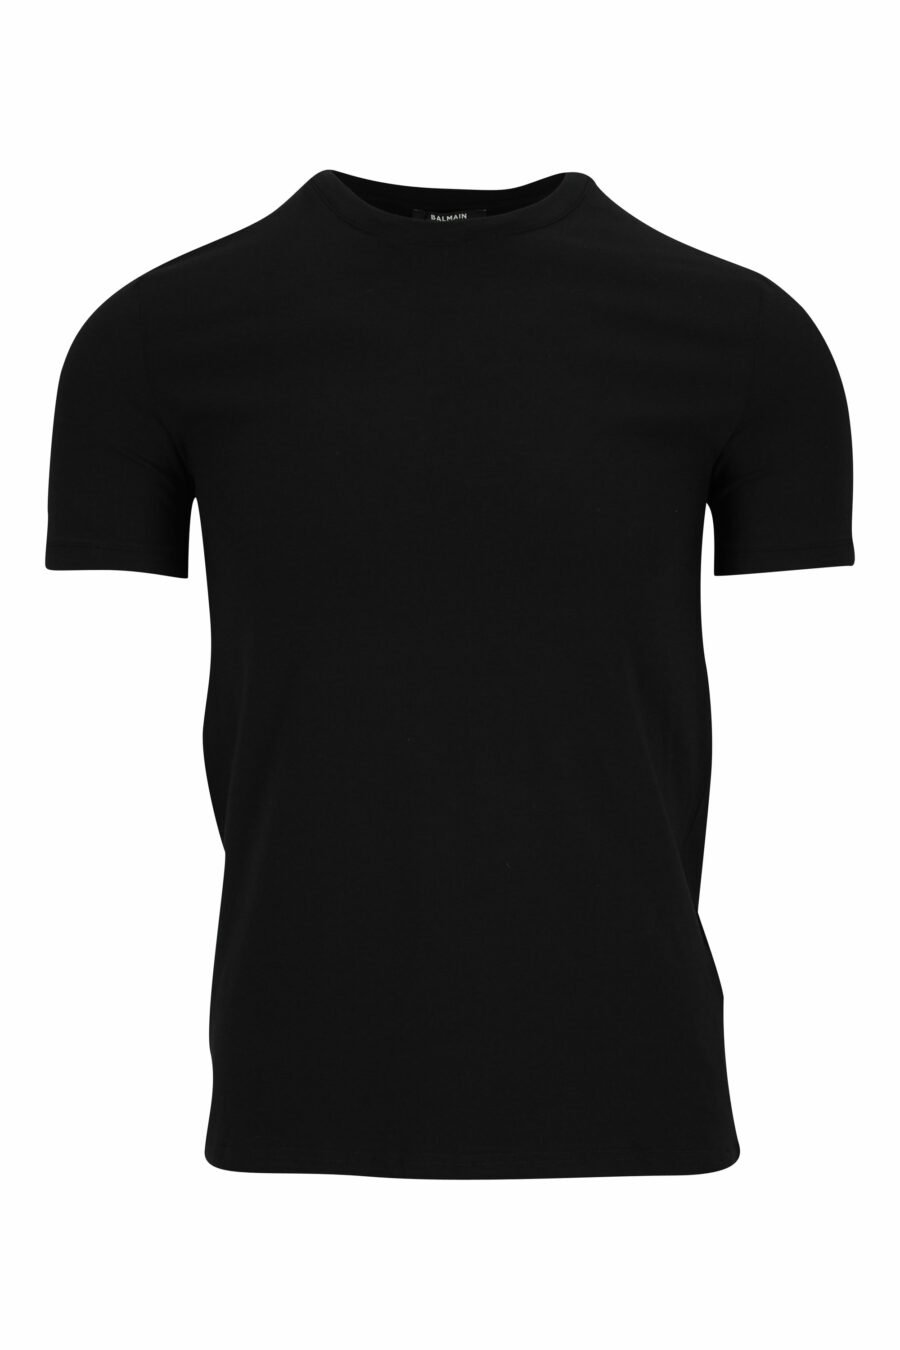 T-shirt preta com mini-logotipo na gola - 8032674524621